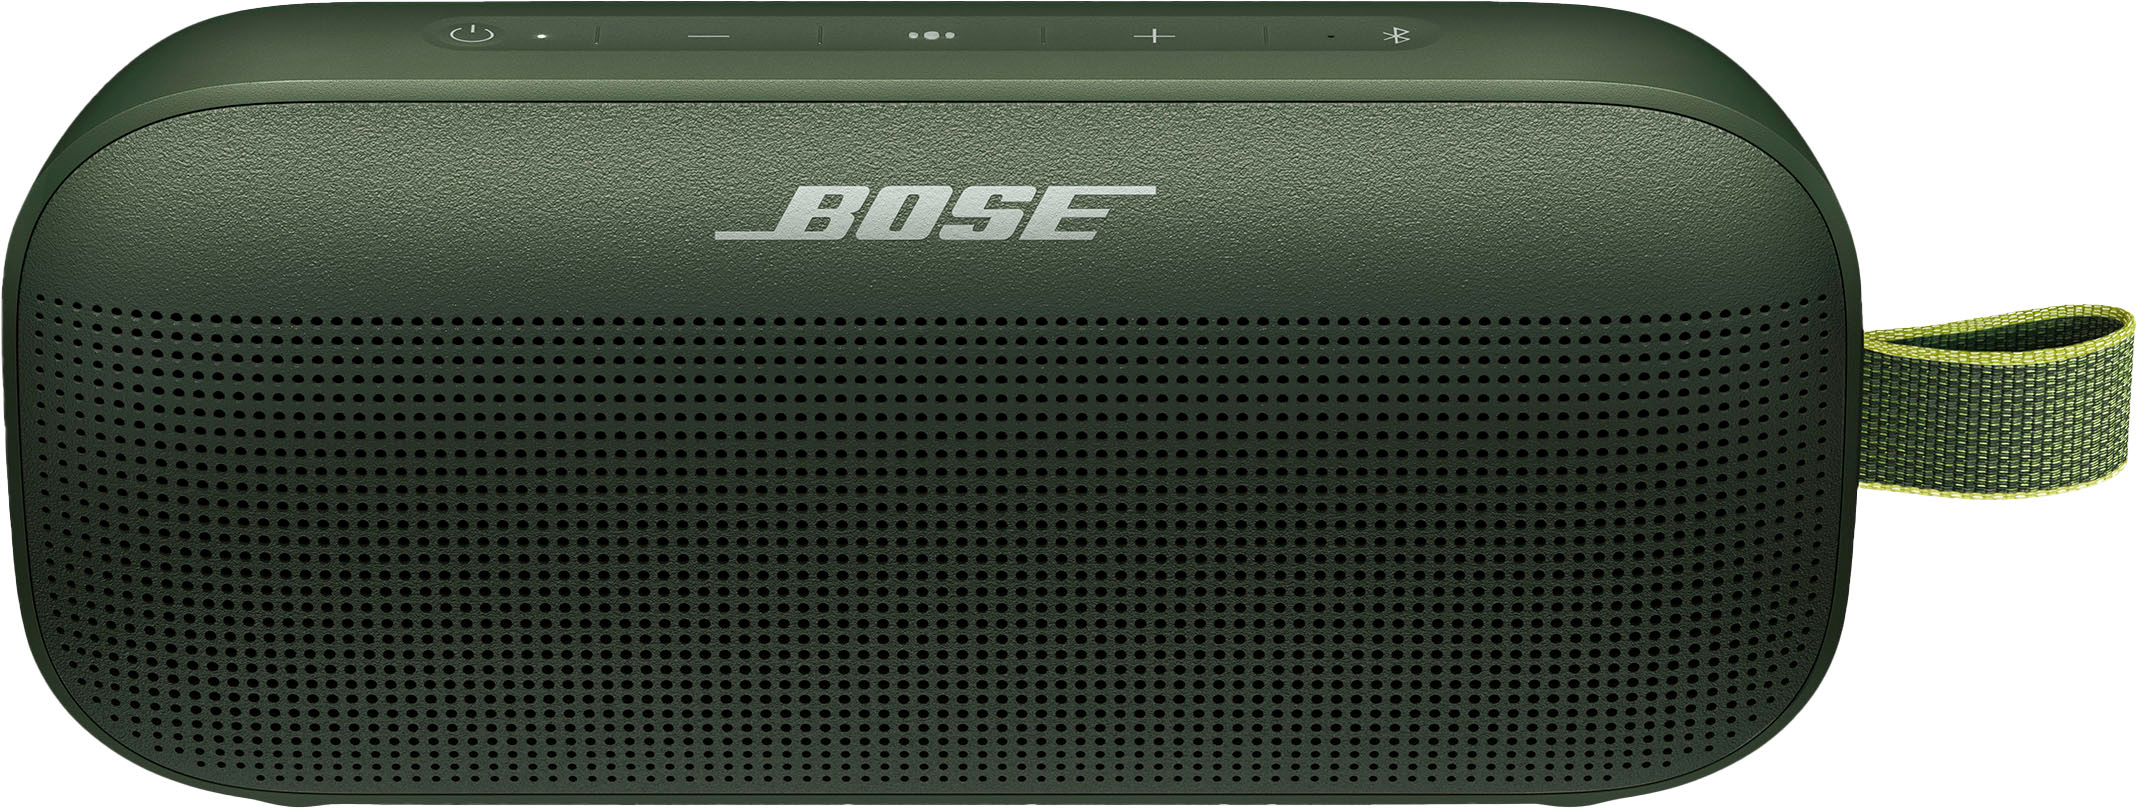 Bose SoundLink Flex Portable Bluetooth Limited Design Green Cypress Waterproof/Dustproof with Speaker - Best 865983-0800 Edition Buy